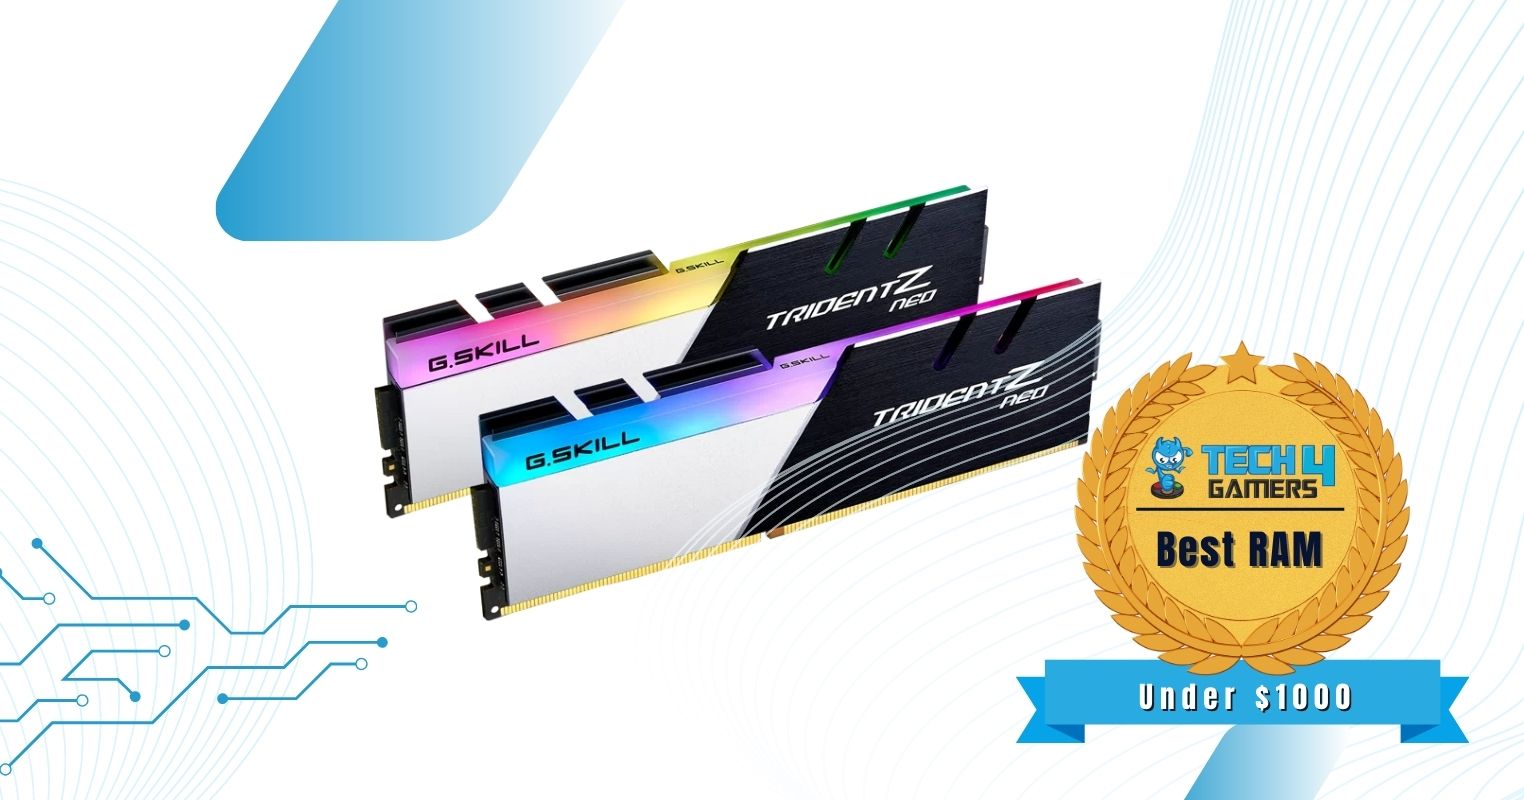 Best $1000 Gaming PC Build - G.Skill Trident Z Neo 16GB RAM